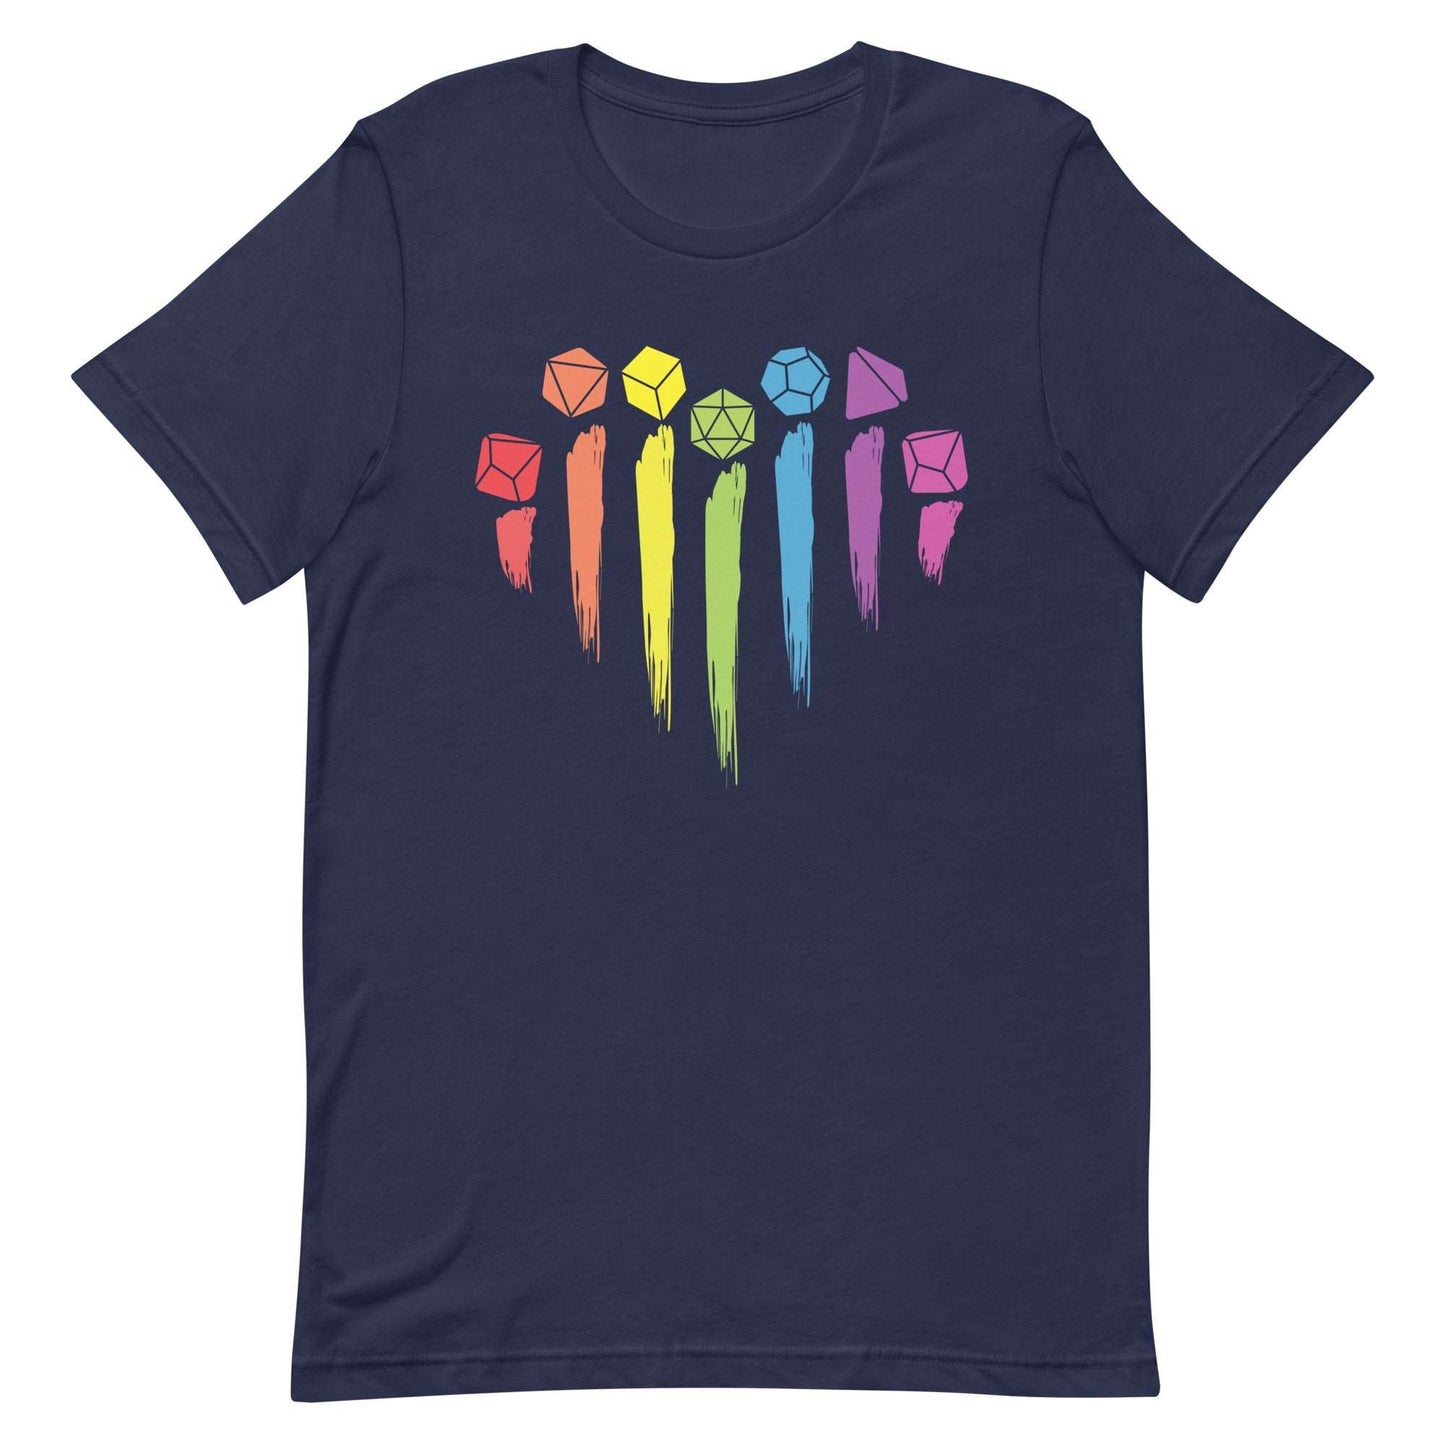 DnD Pride Shirt - Dungeons & Dragons Rainbow Heart T-shirt - RPG Pride Shirt T-Shirt Navy / S